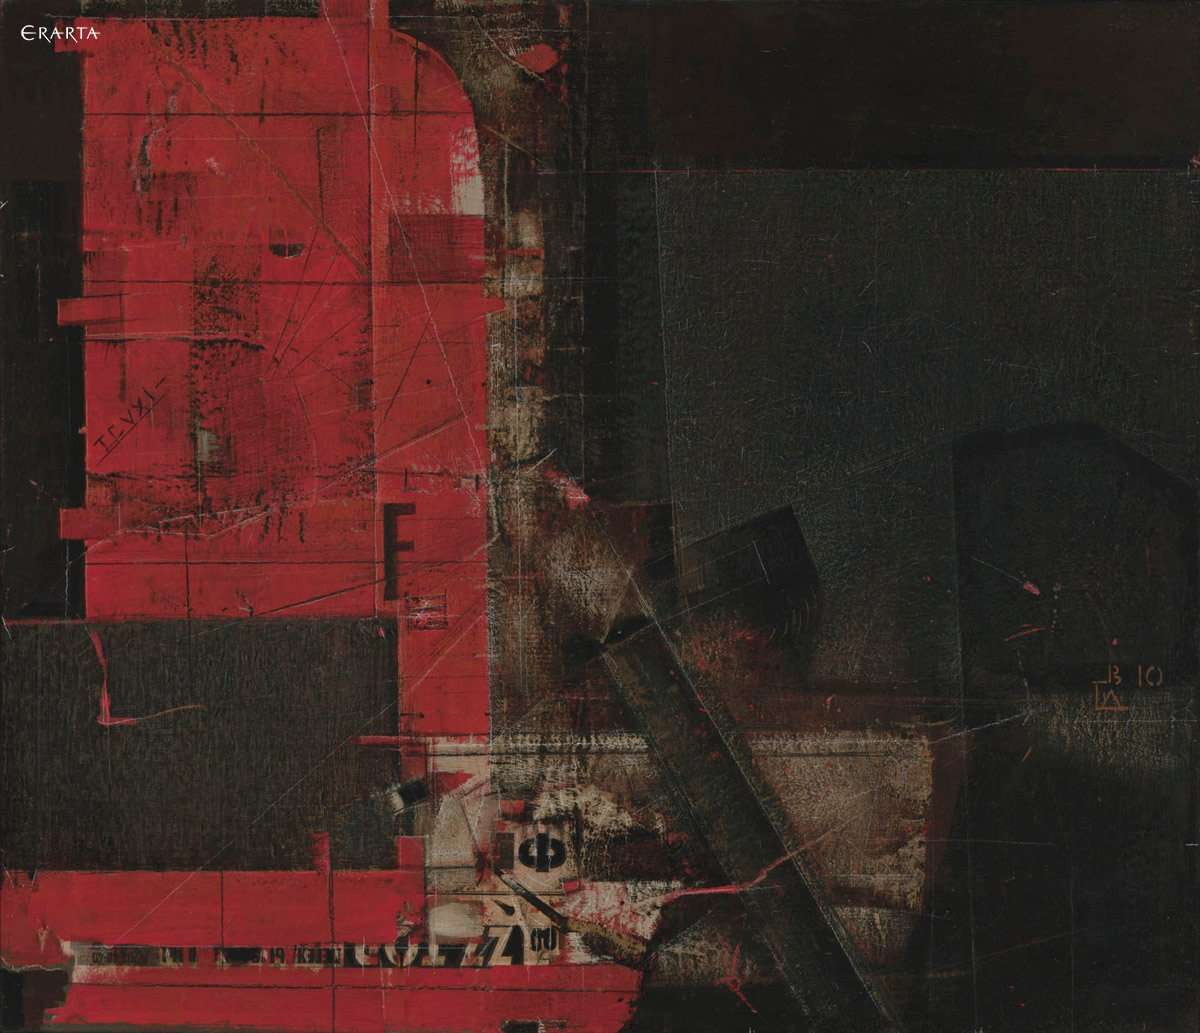 The Red Mirror, artist Vladimir Dukhovlinov